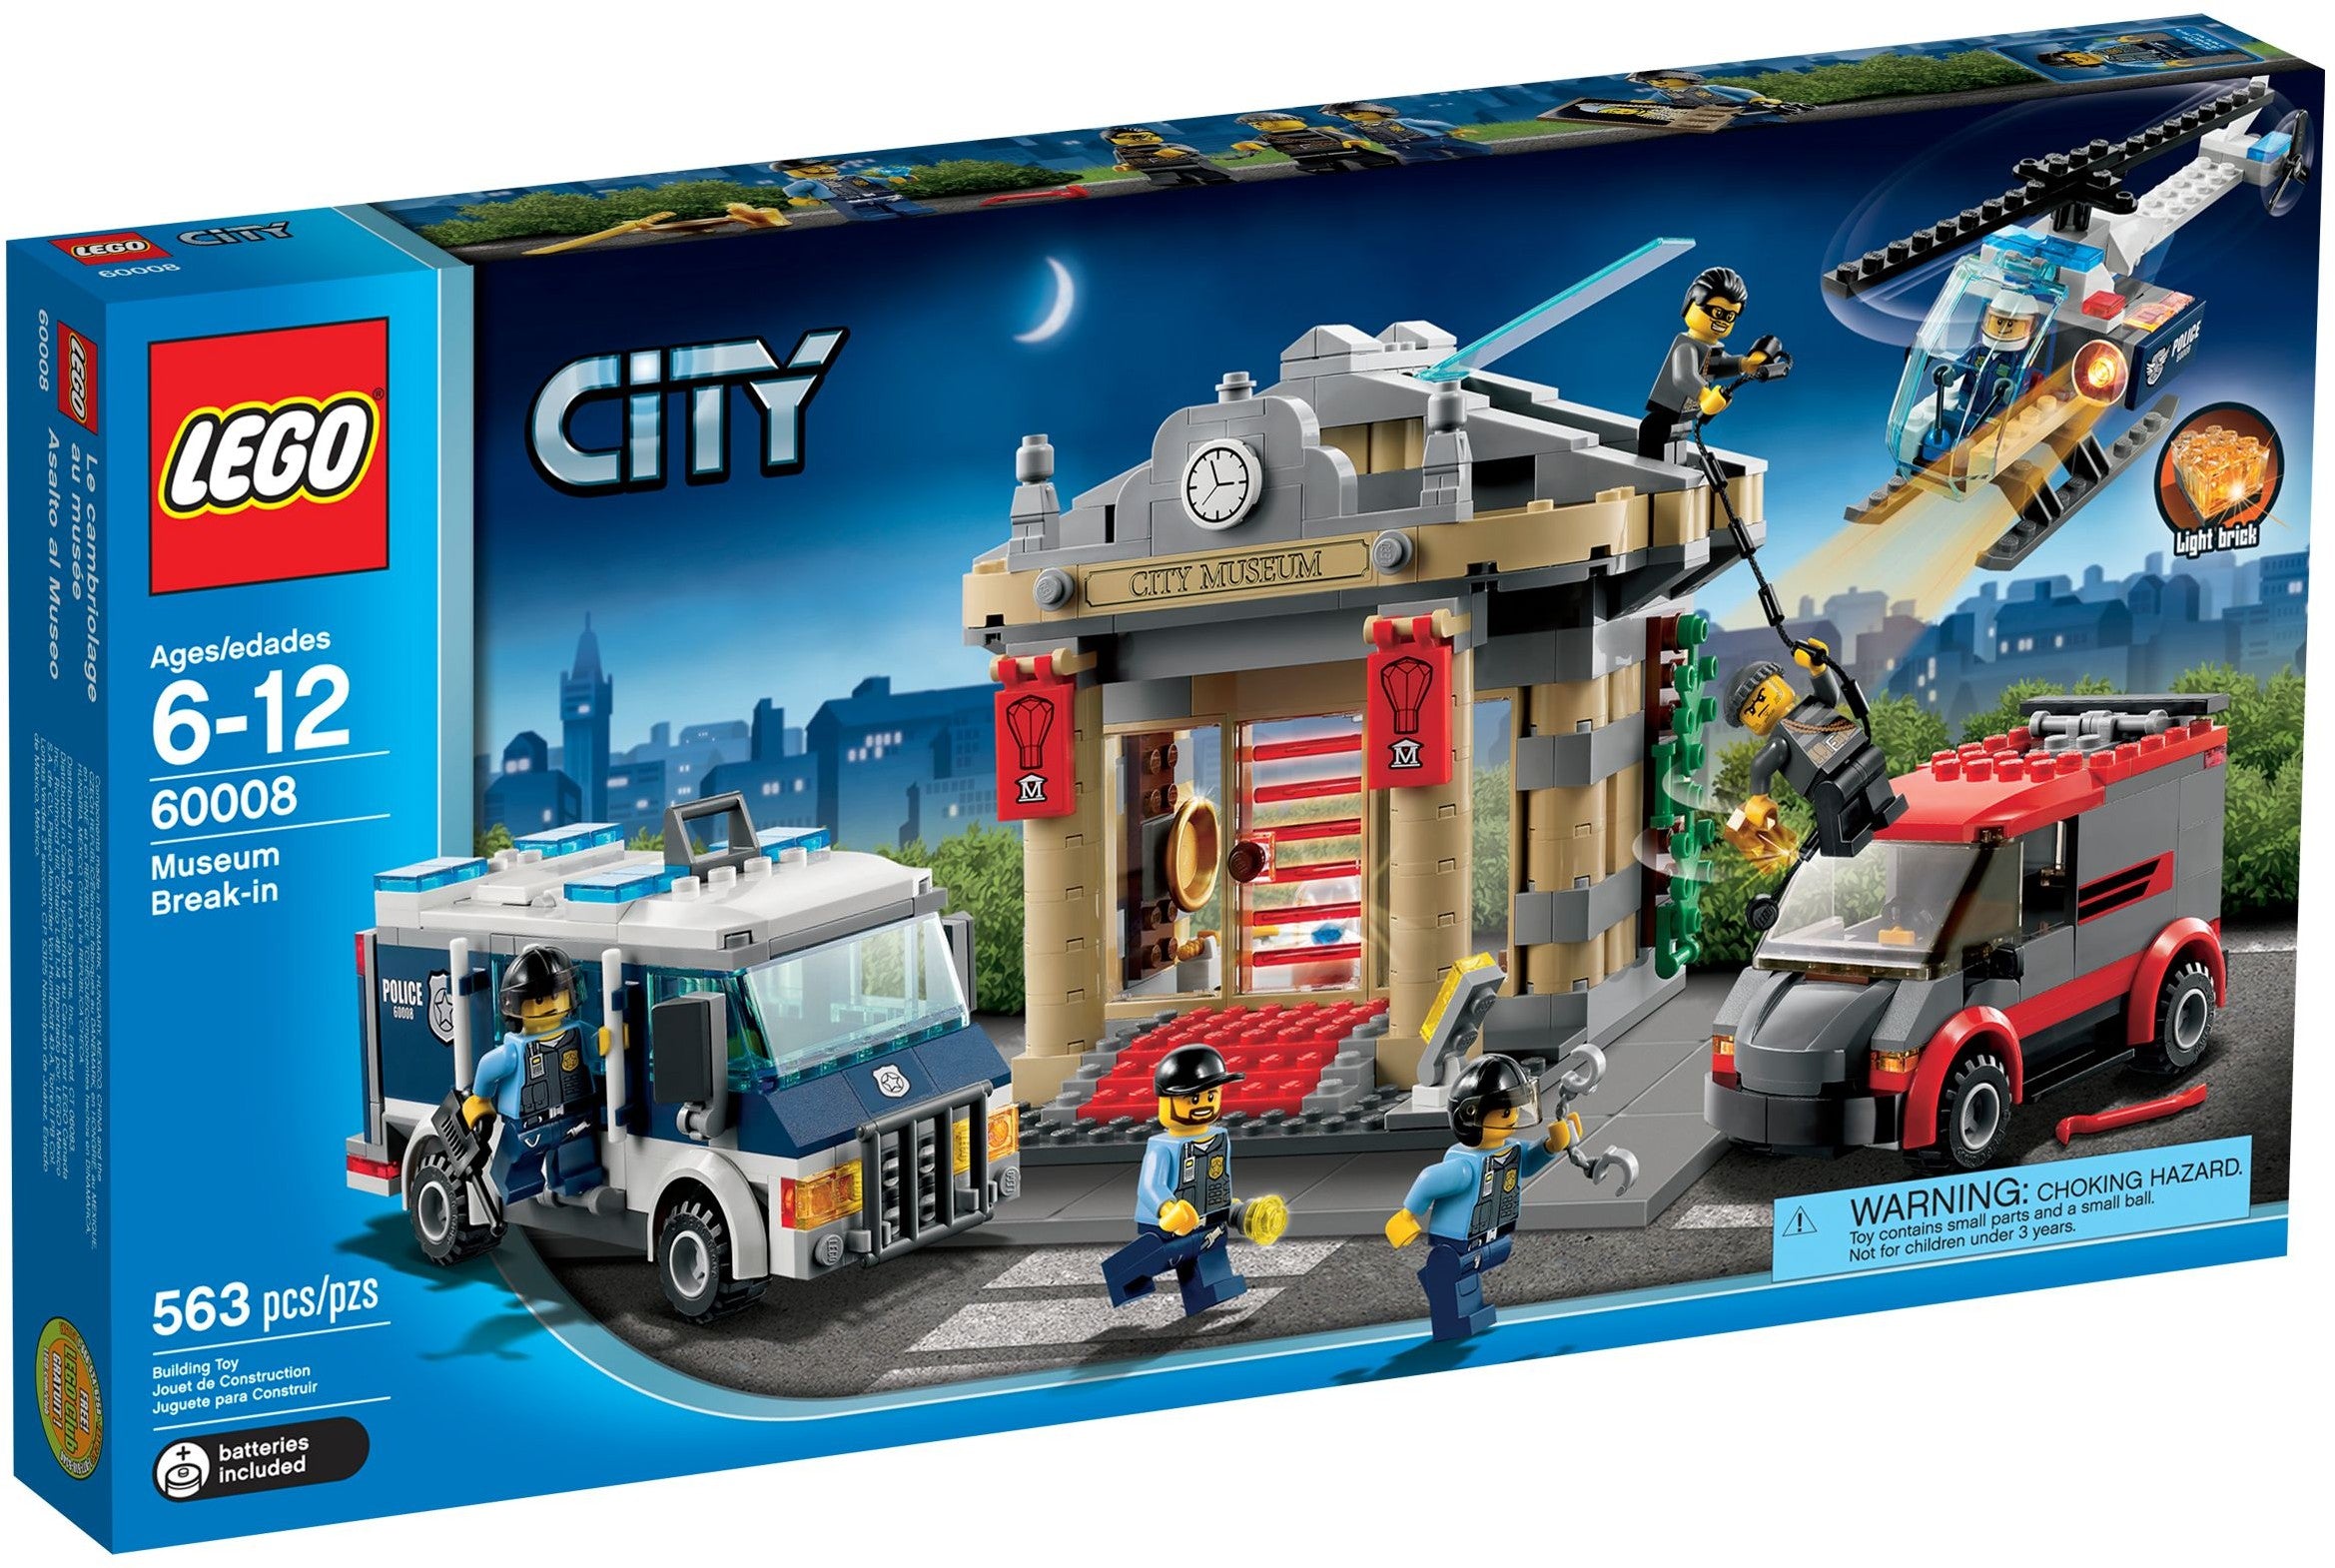 Lego City 60008 - Museum Break-in